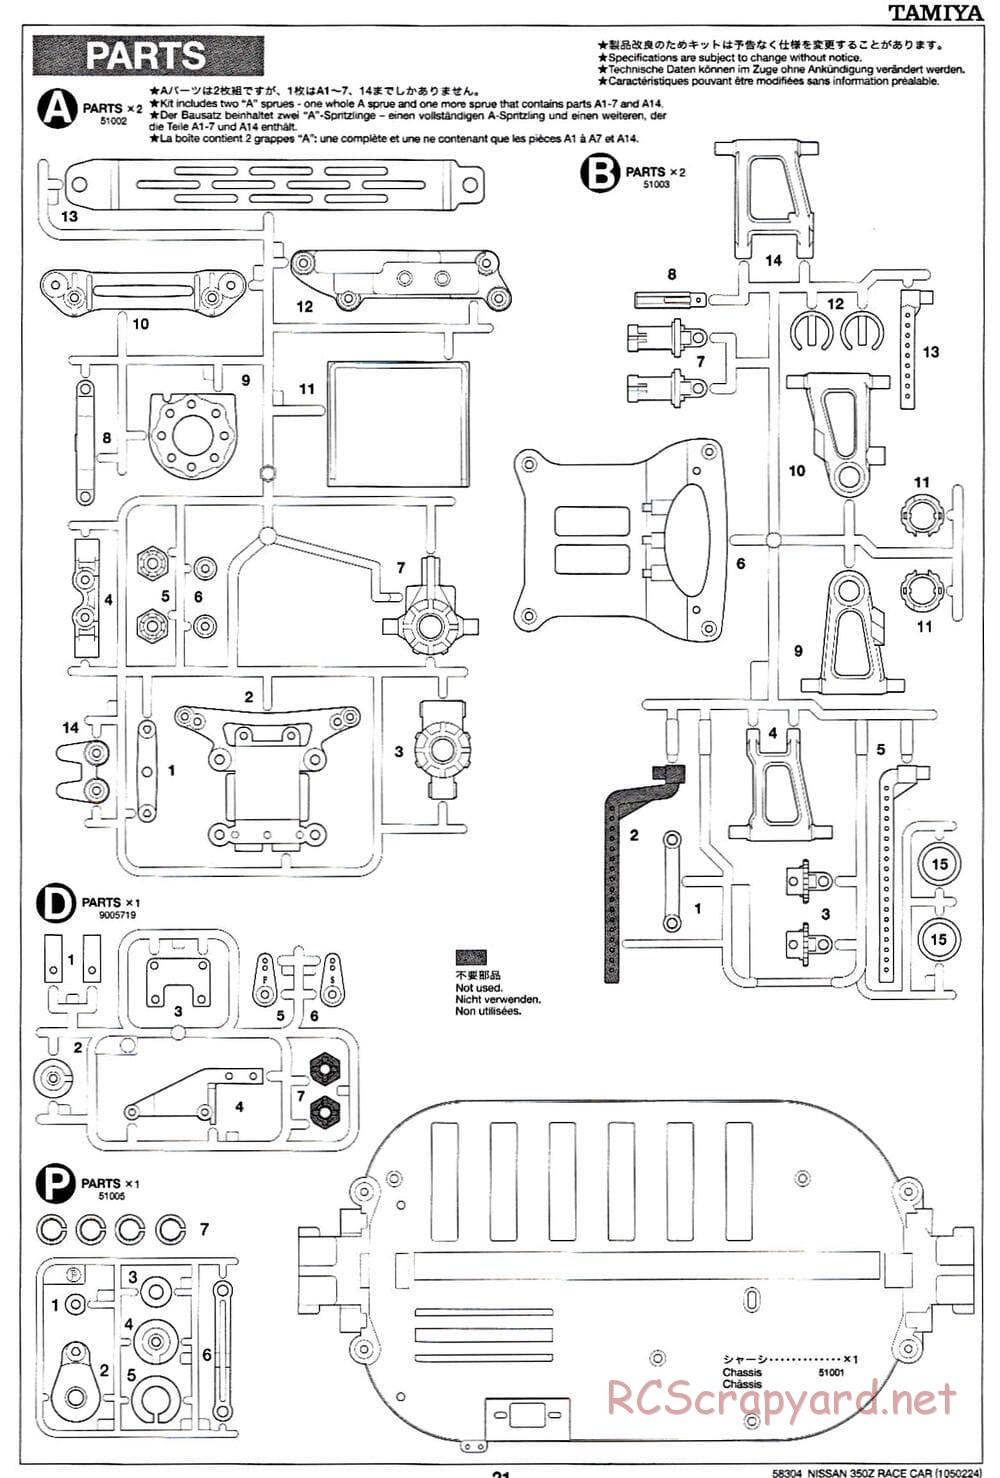 Tamiya - Nissan 350Z Race-Car - TT-01 Chassis - Manual - Page 21